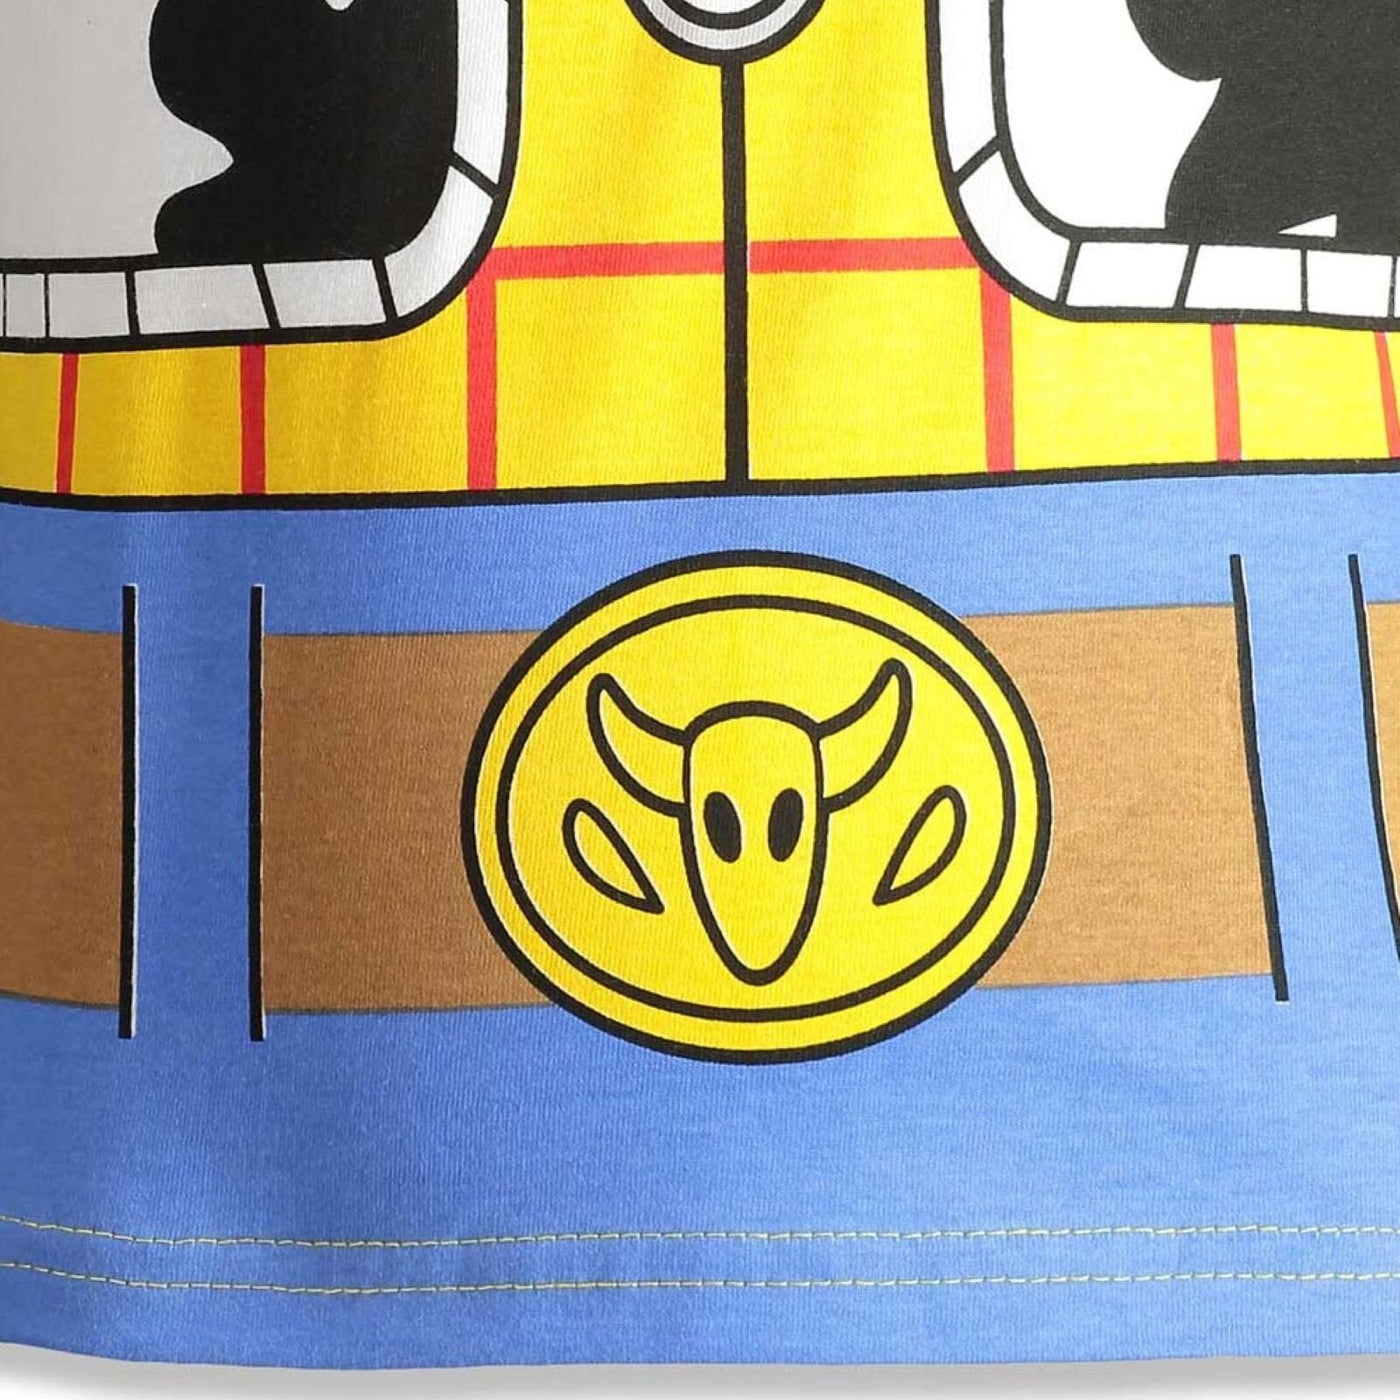 Disney Toy Story 4 Pack T-Shirts - imagikids